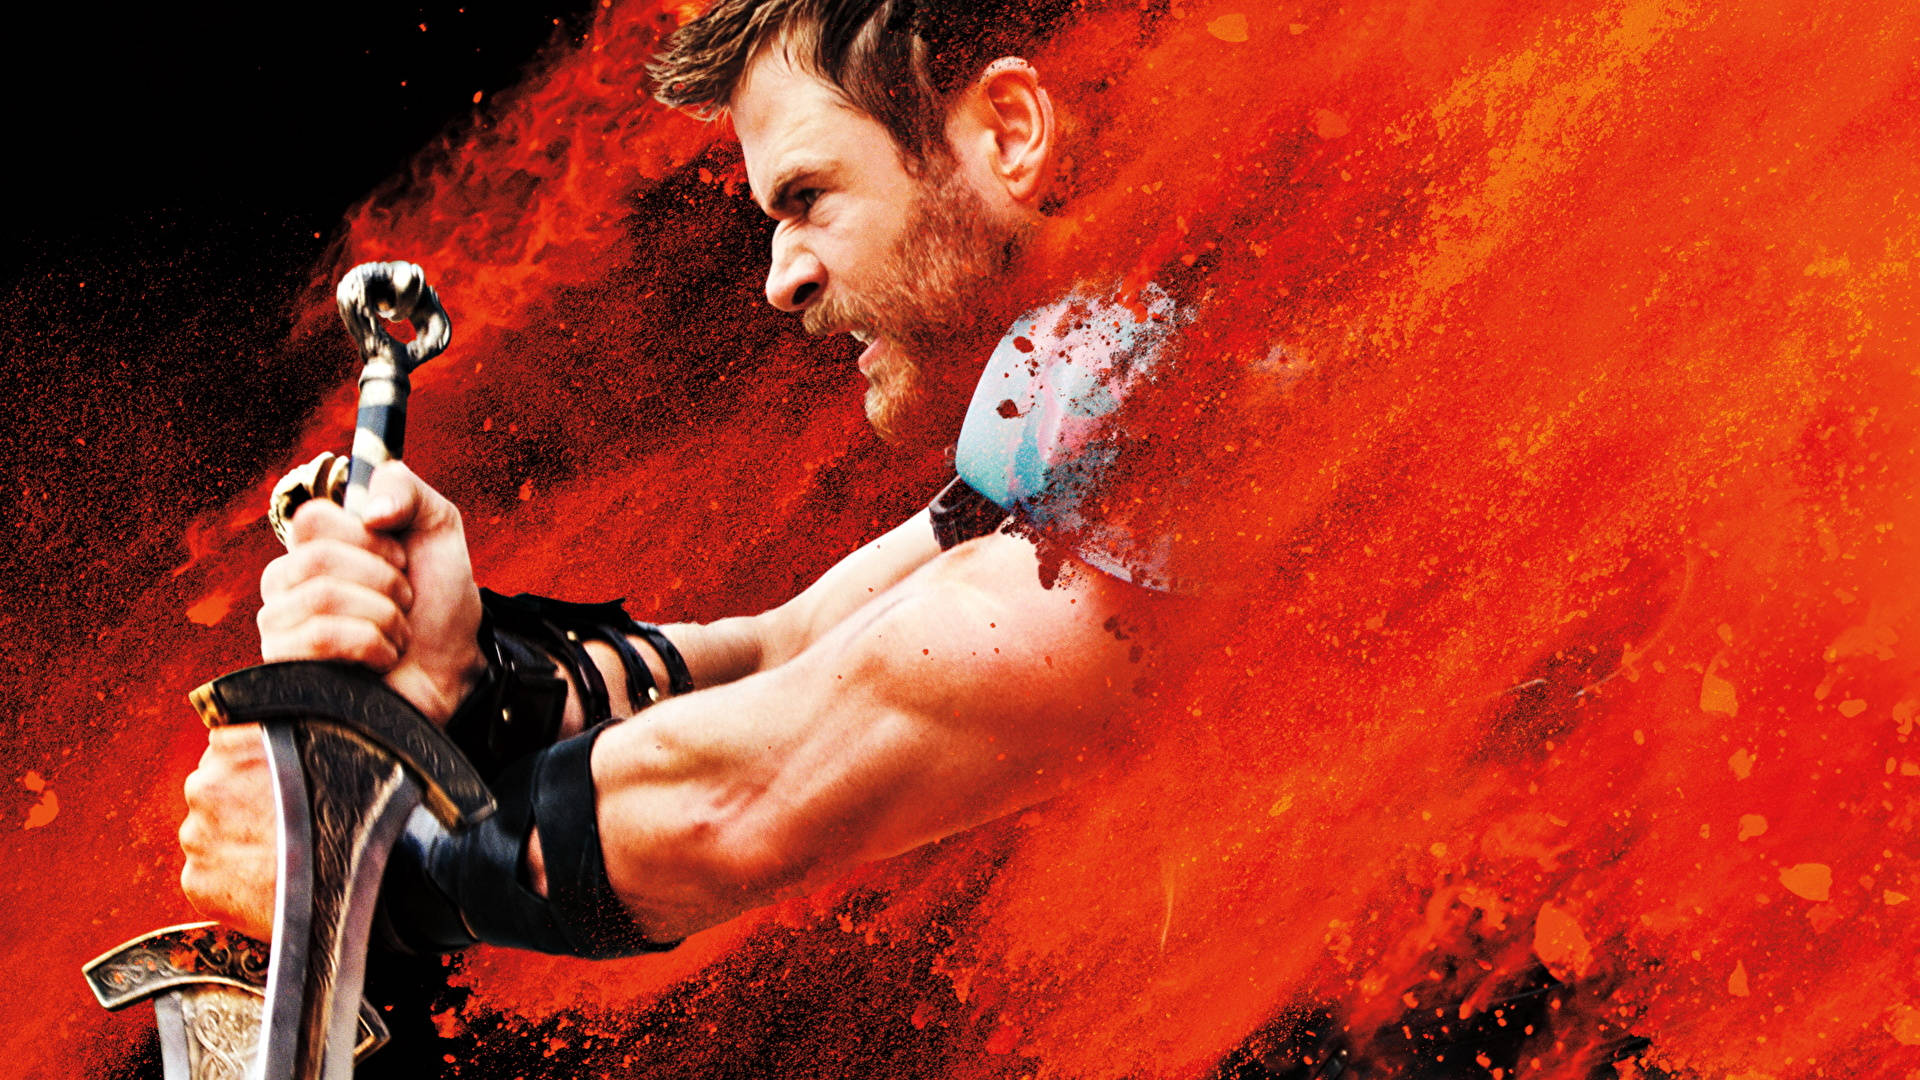 Chris Hemsworth Portrayed As Marvel's Legendary Superhero, Thor